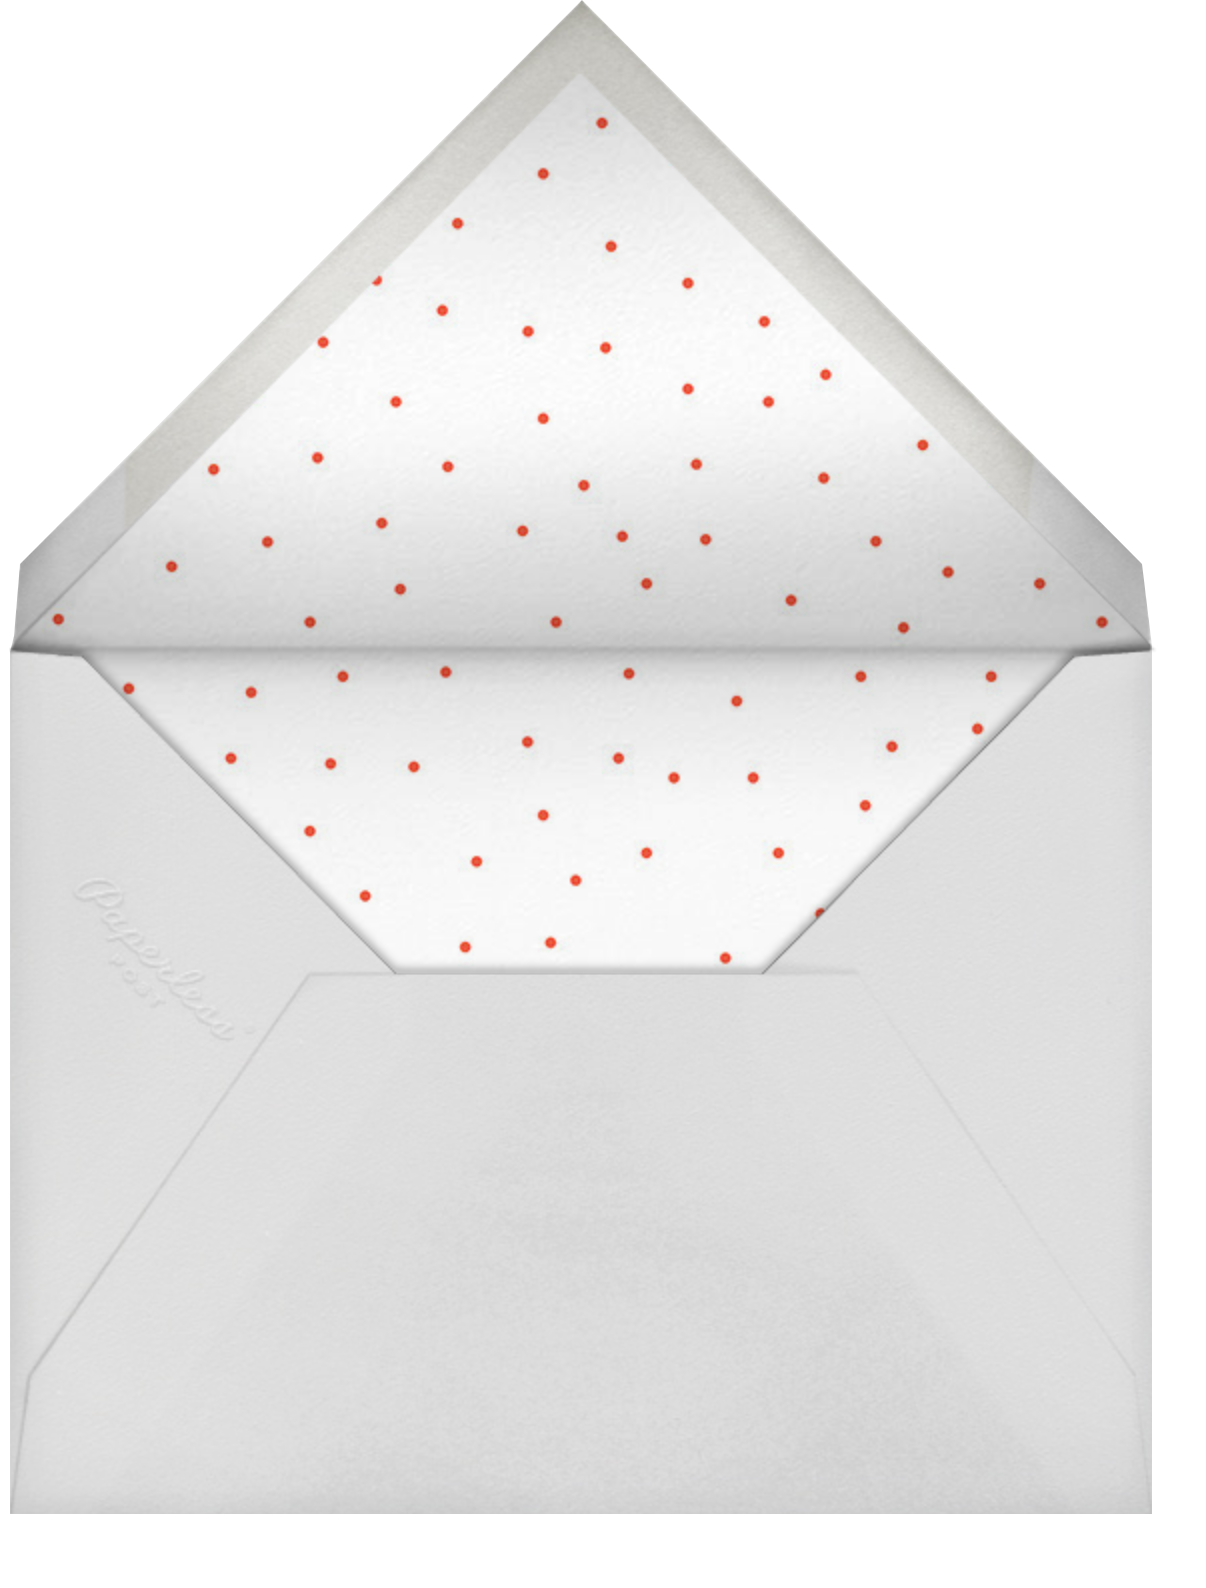 Caps Wrap - Cheree Berry Paper & Design - Envelope